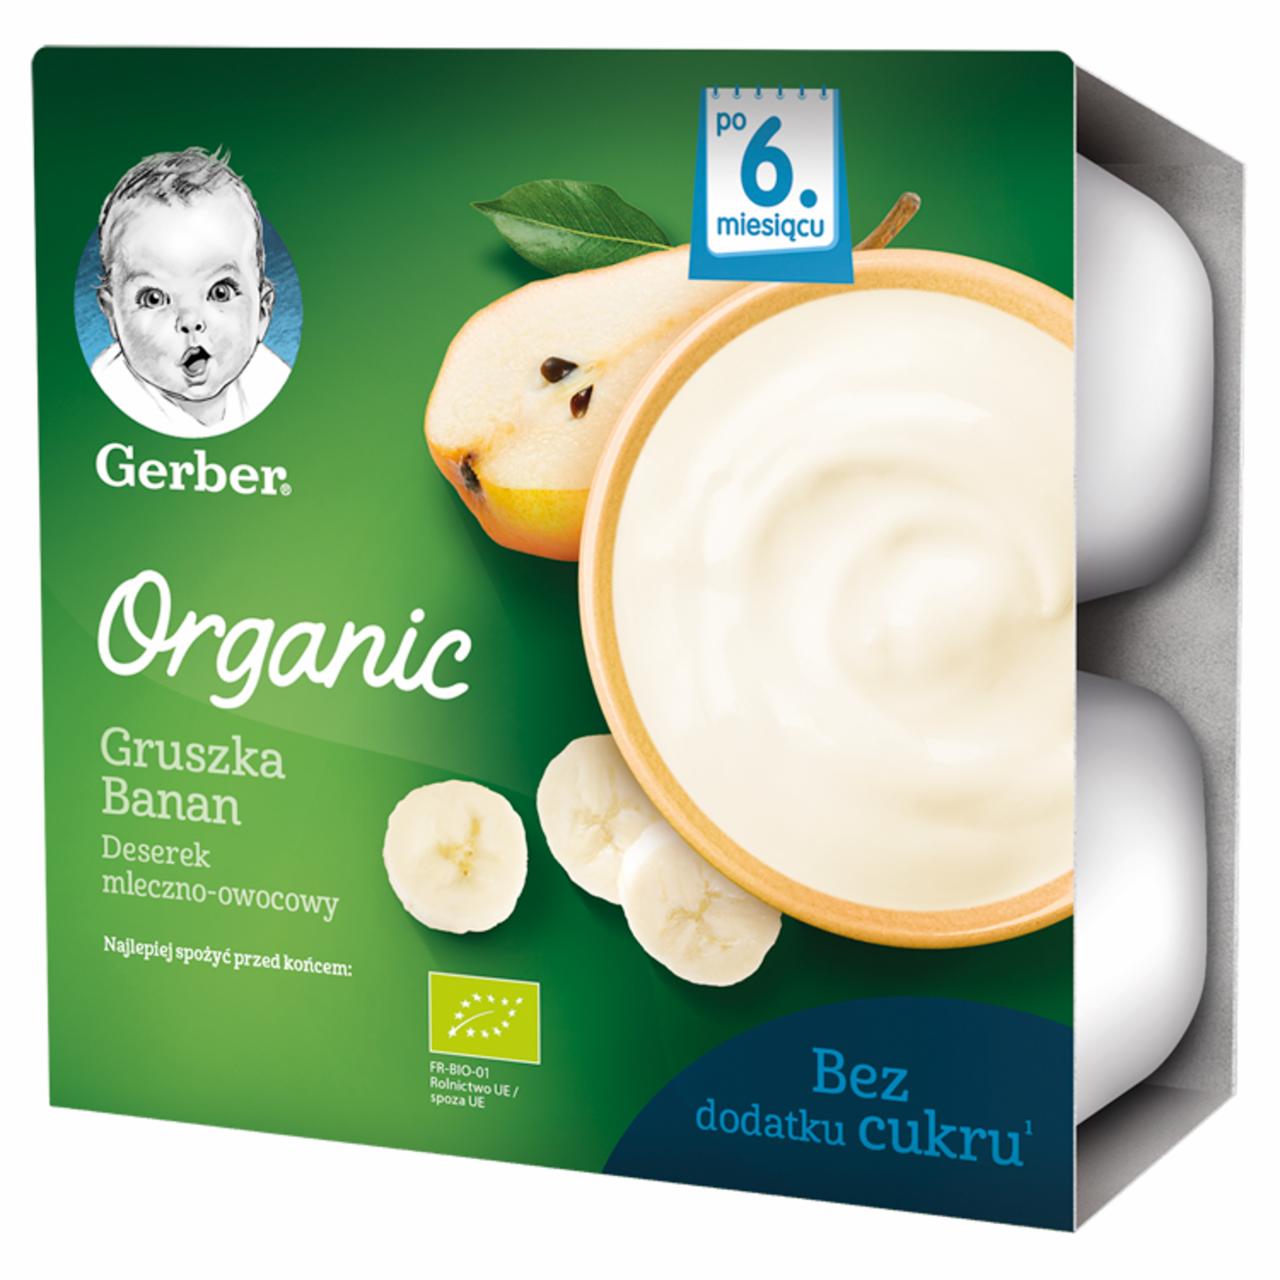 Photo - Gerber Organic Pear Banana for Infants after 6. Months Onwards Milk-Fruit Dessert 360 g (4 x 90 g)